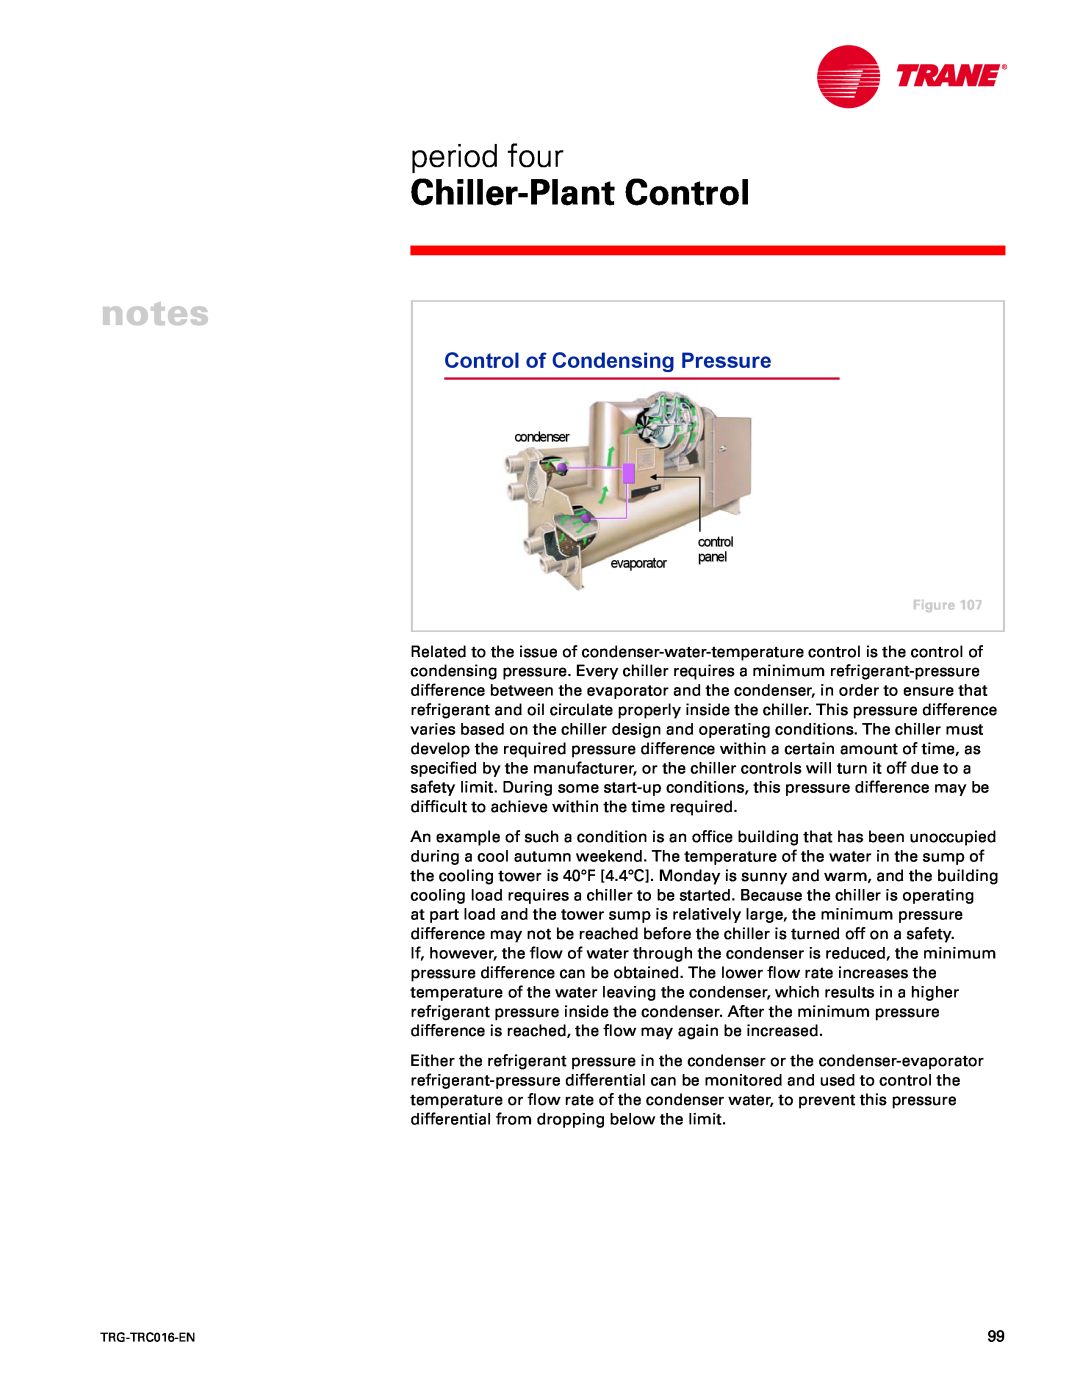 Trane TRG-TRC016-EN manual Control of Condensing Pressure, Chiller-PlantControl, period four 